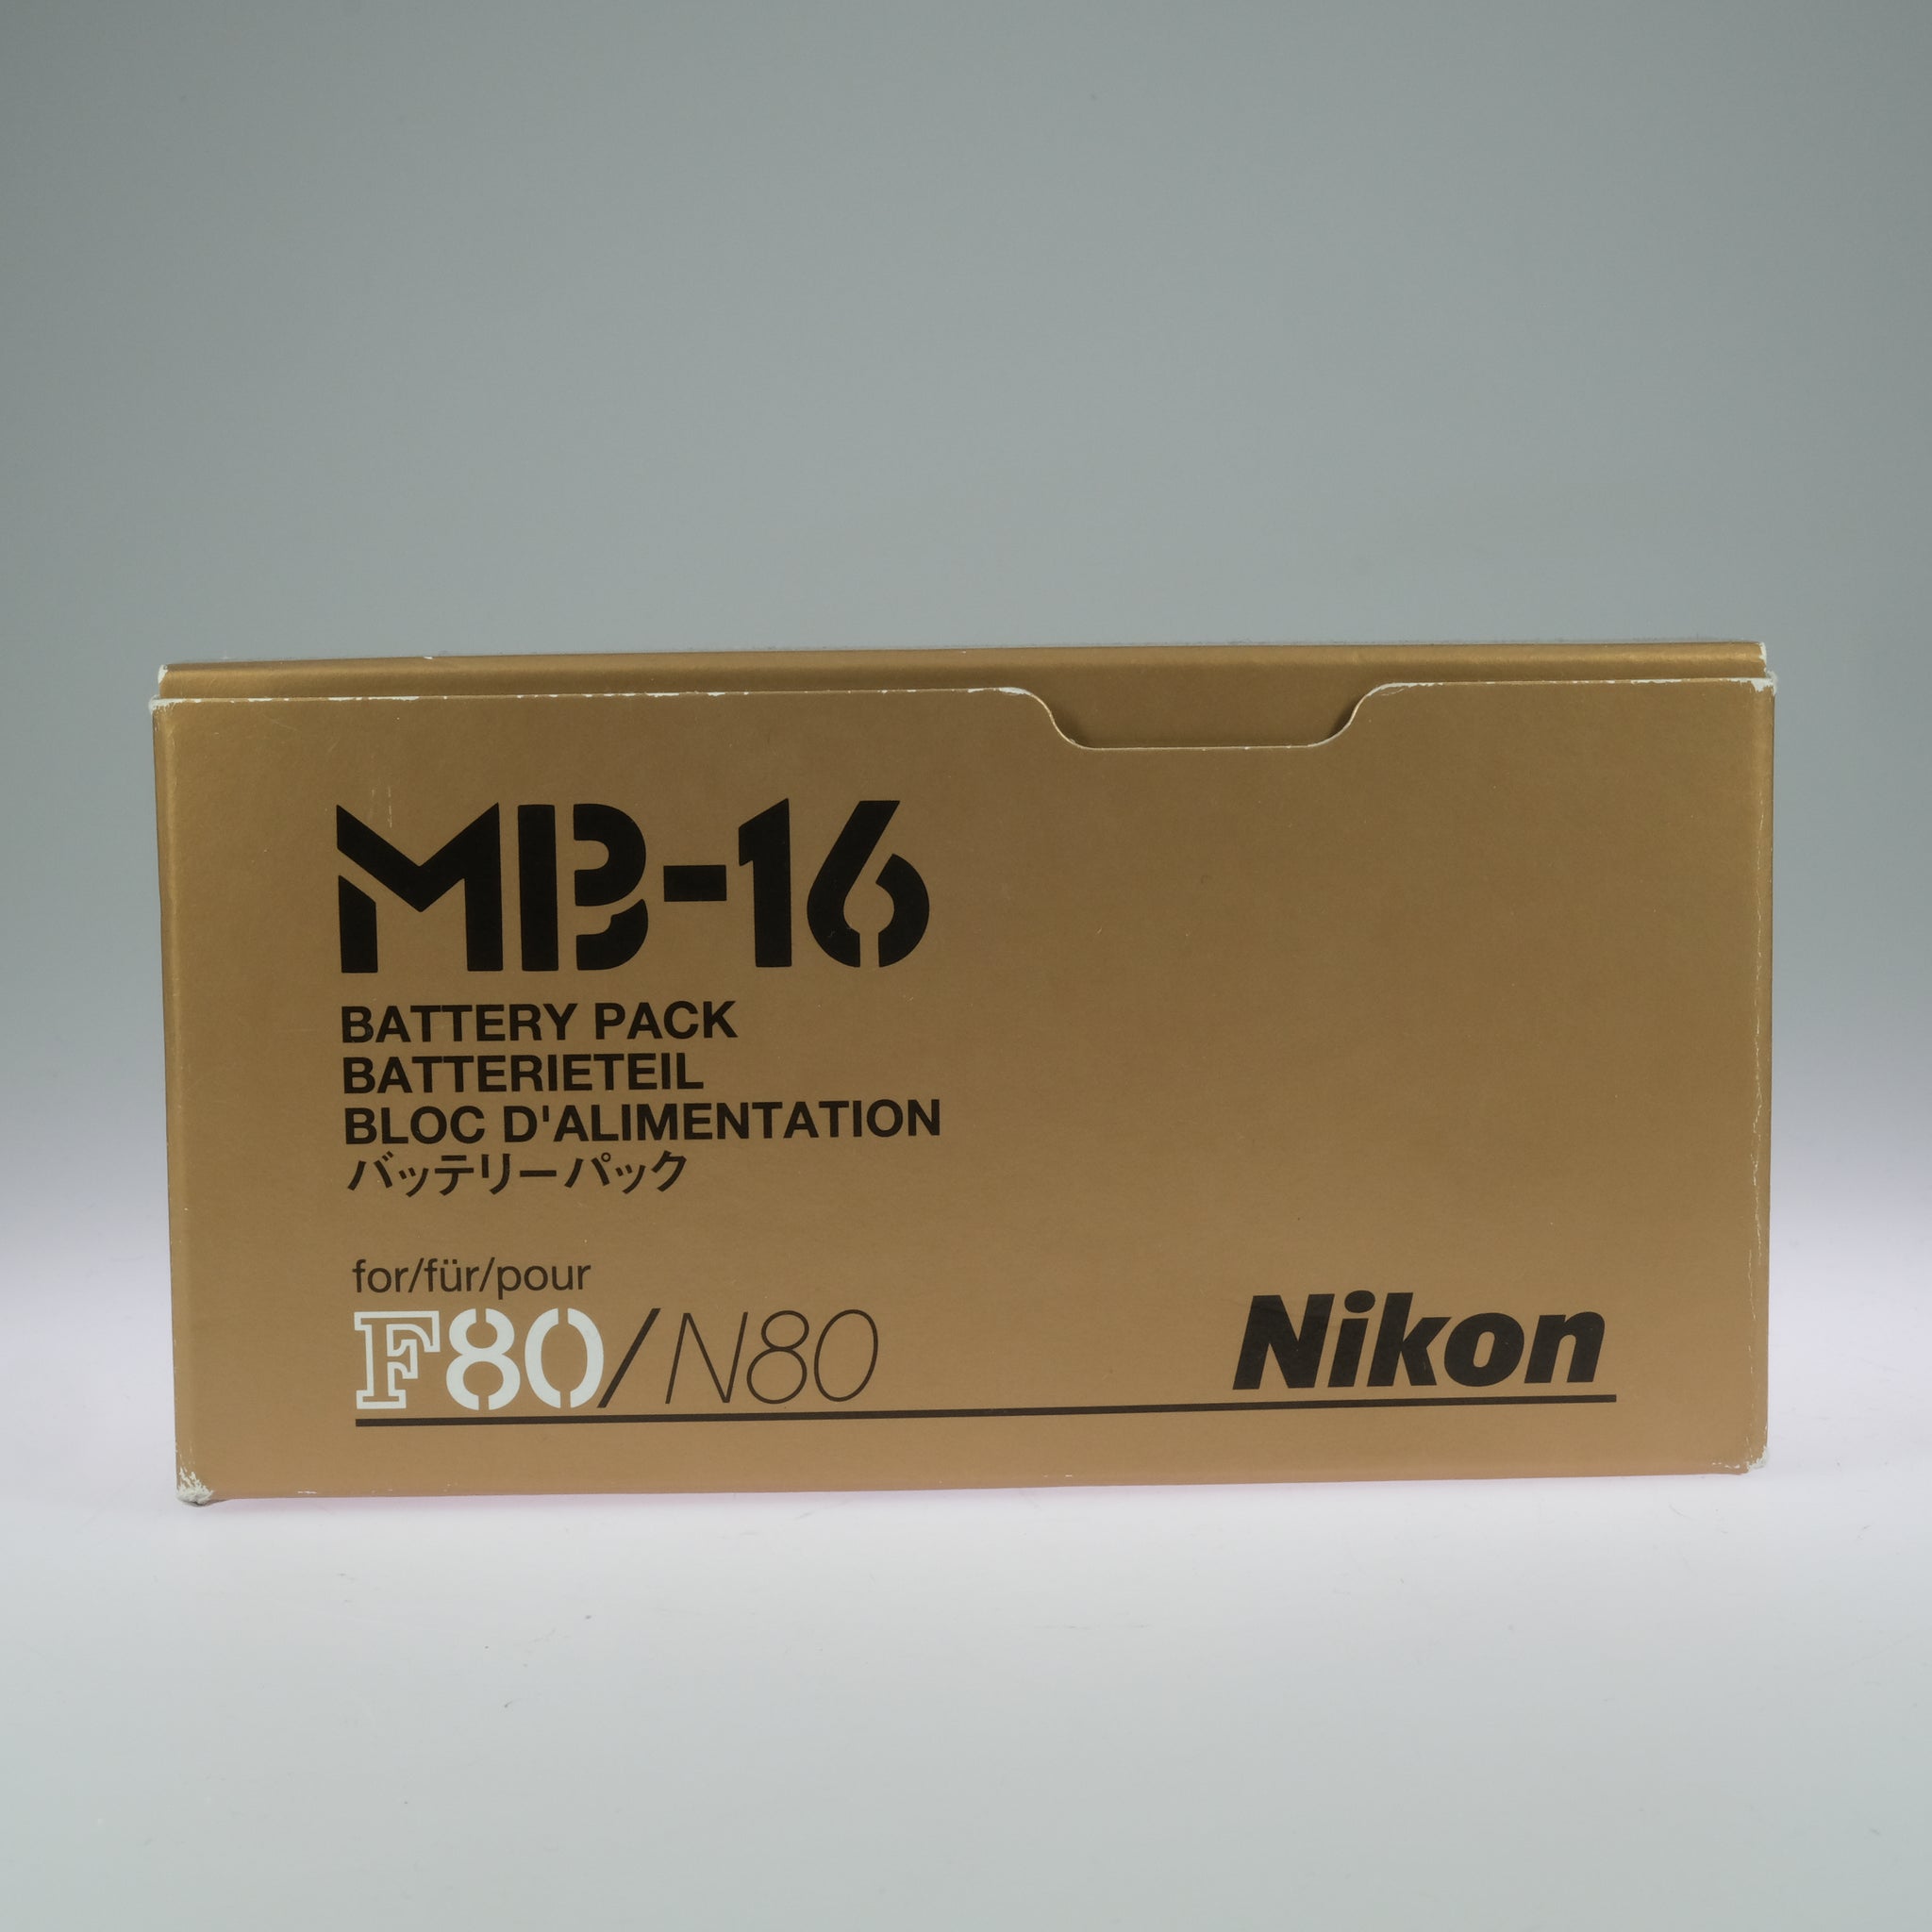 Nikon MB16 Battery Pack